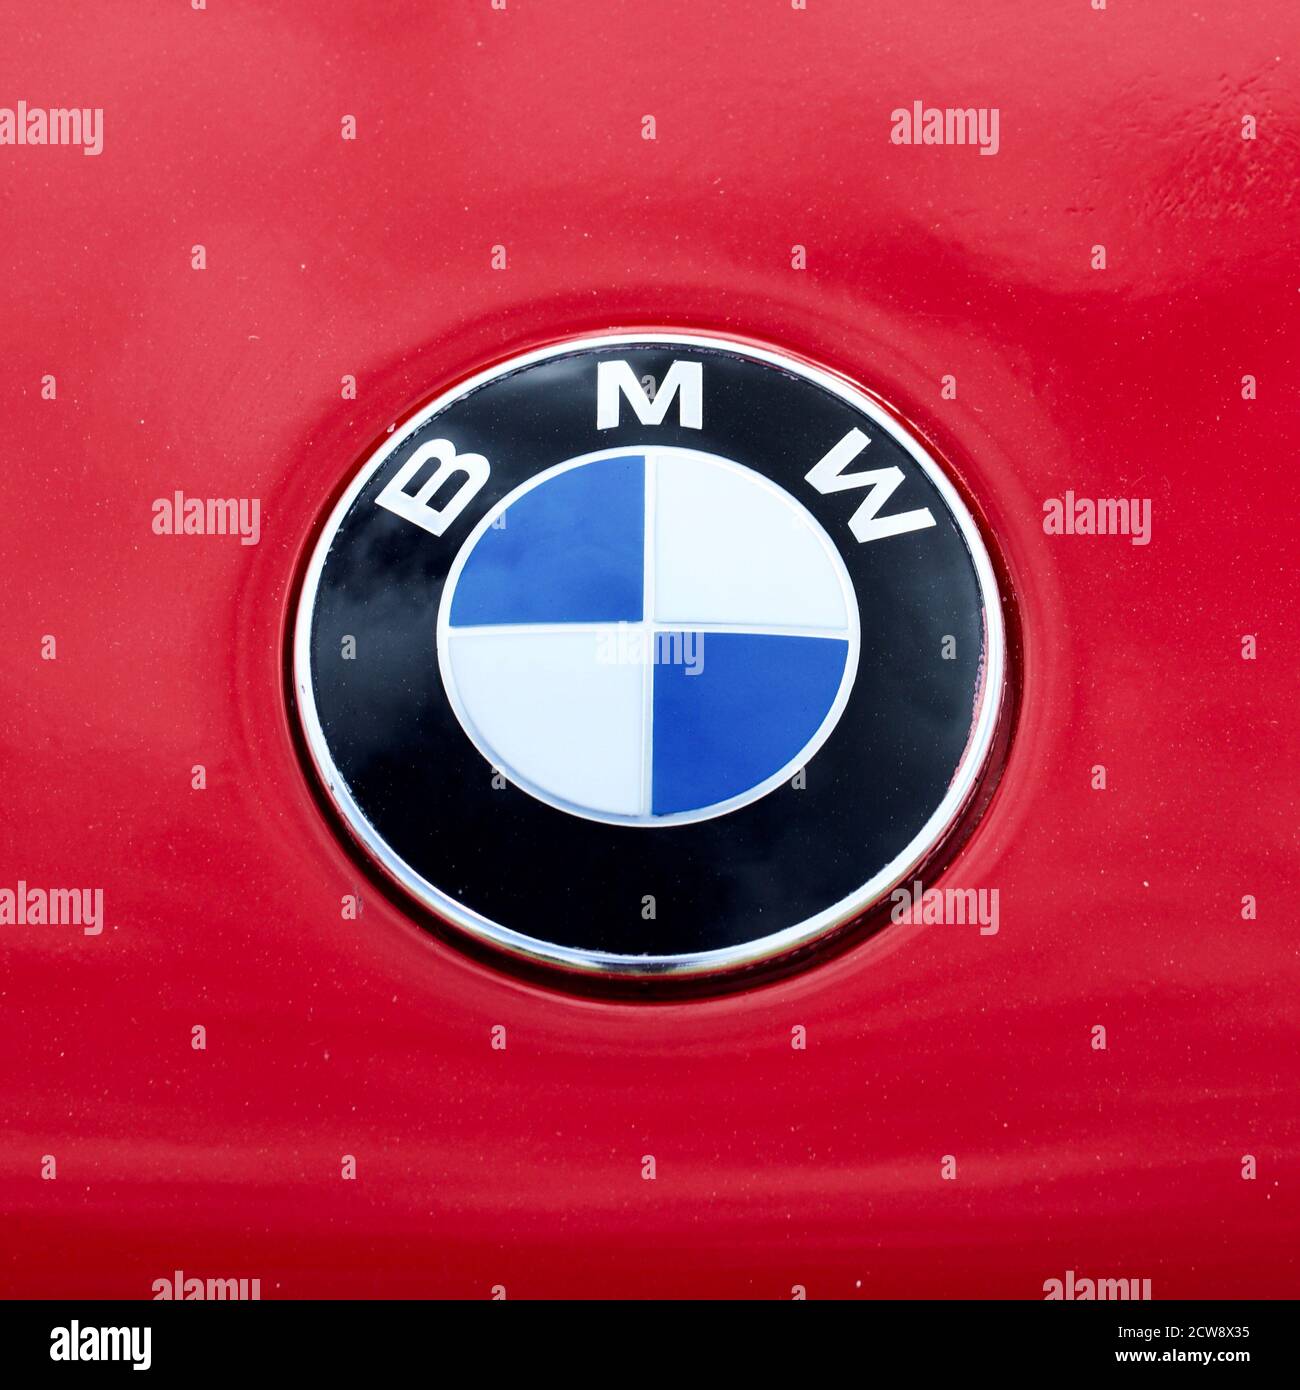 BMW Logo on Car Bonnet Stock Photo